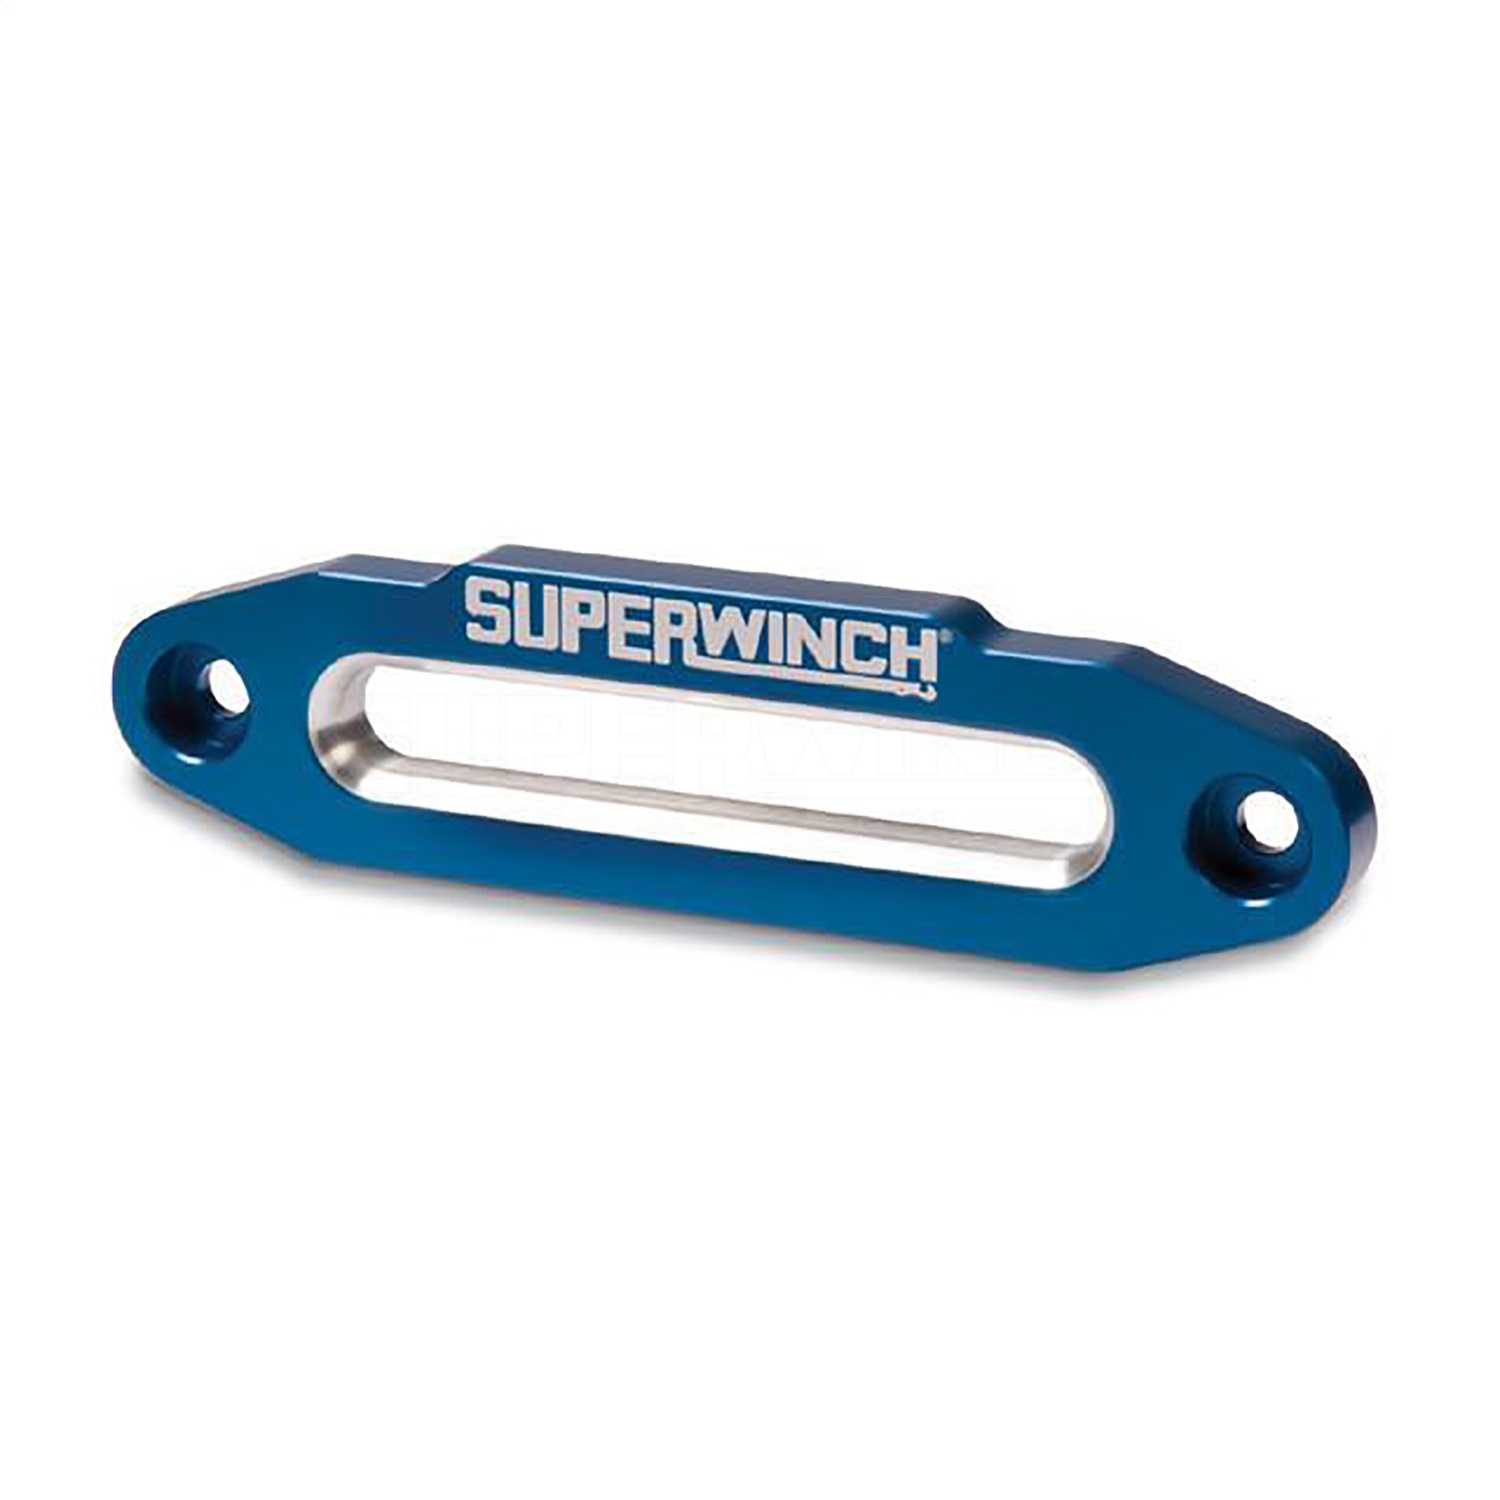 Superwinch Replacement Hawse Fairlead (use w/ Terra 45SR/4500SR Winches) - Blue - 87-42620